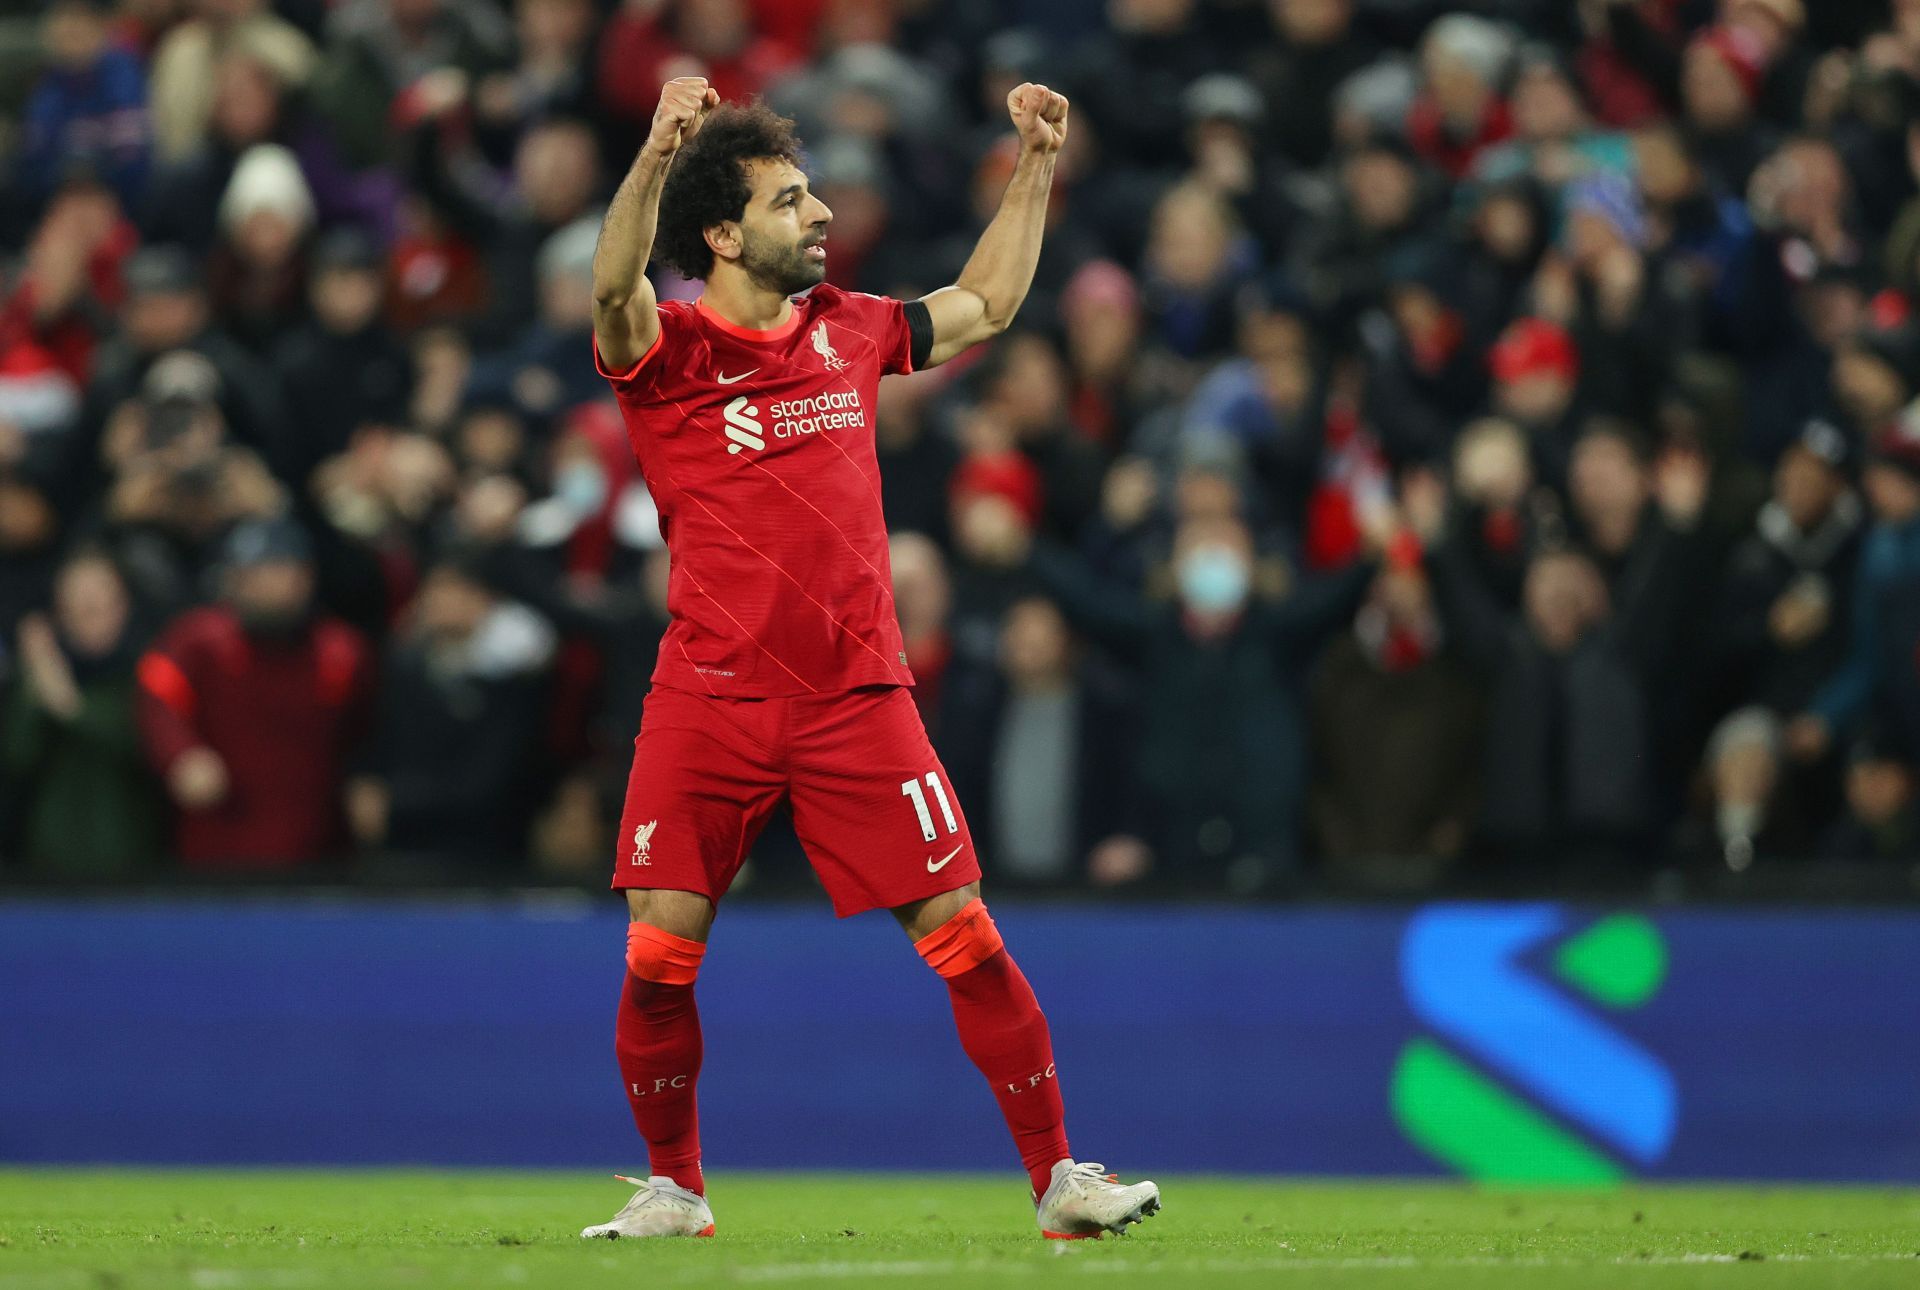 Liverpool v Aston Villa - Mohamed Salah celebrates